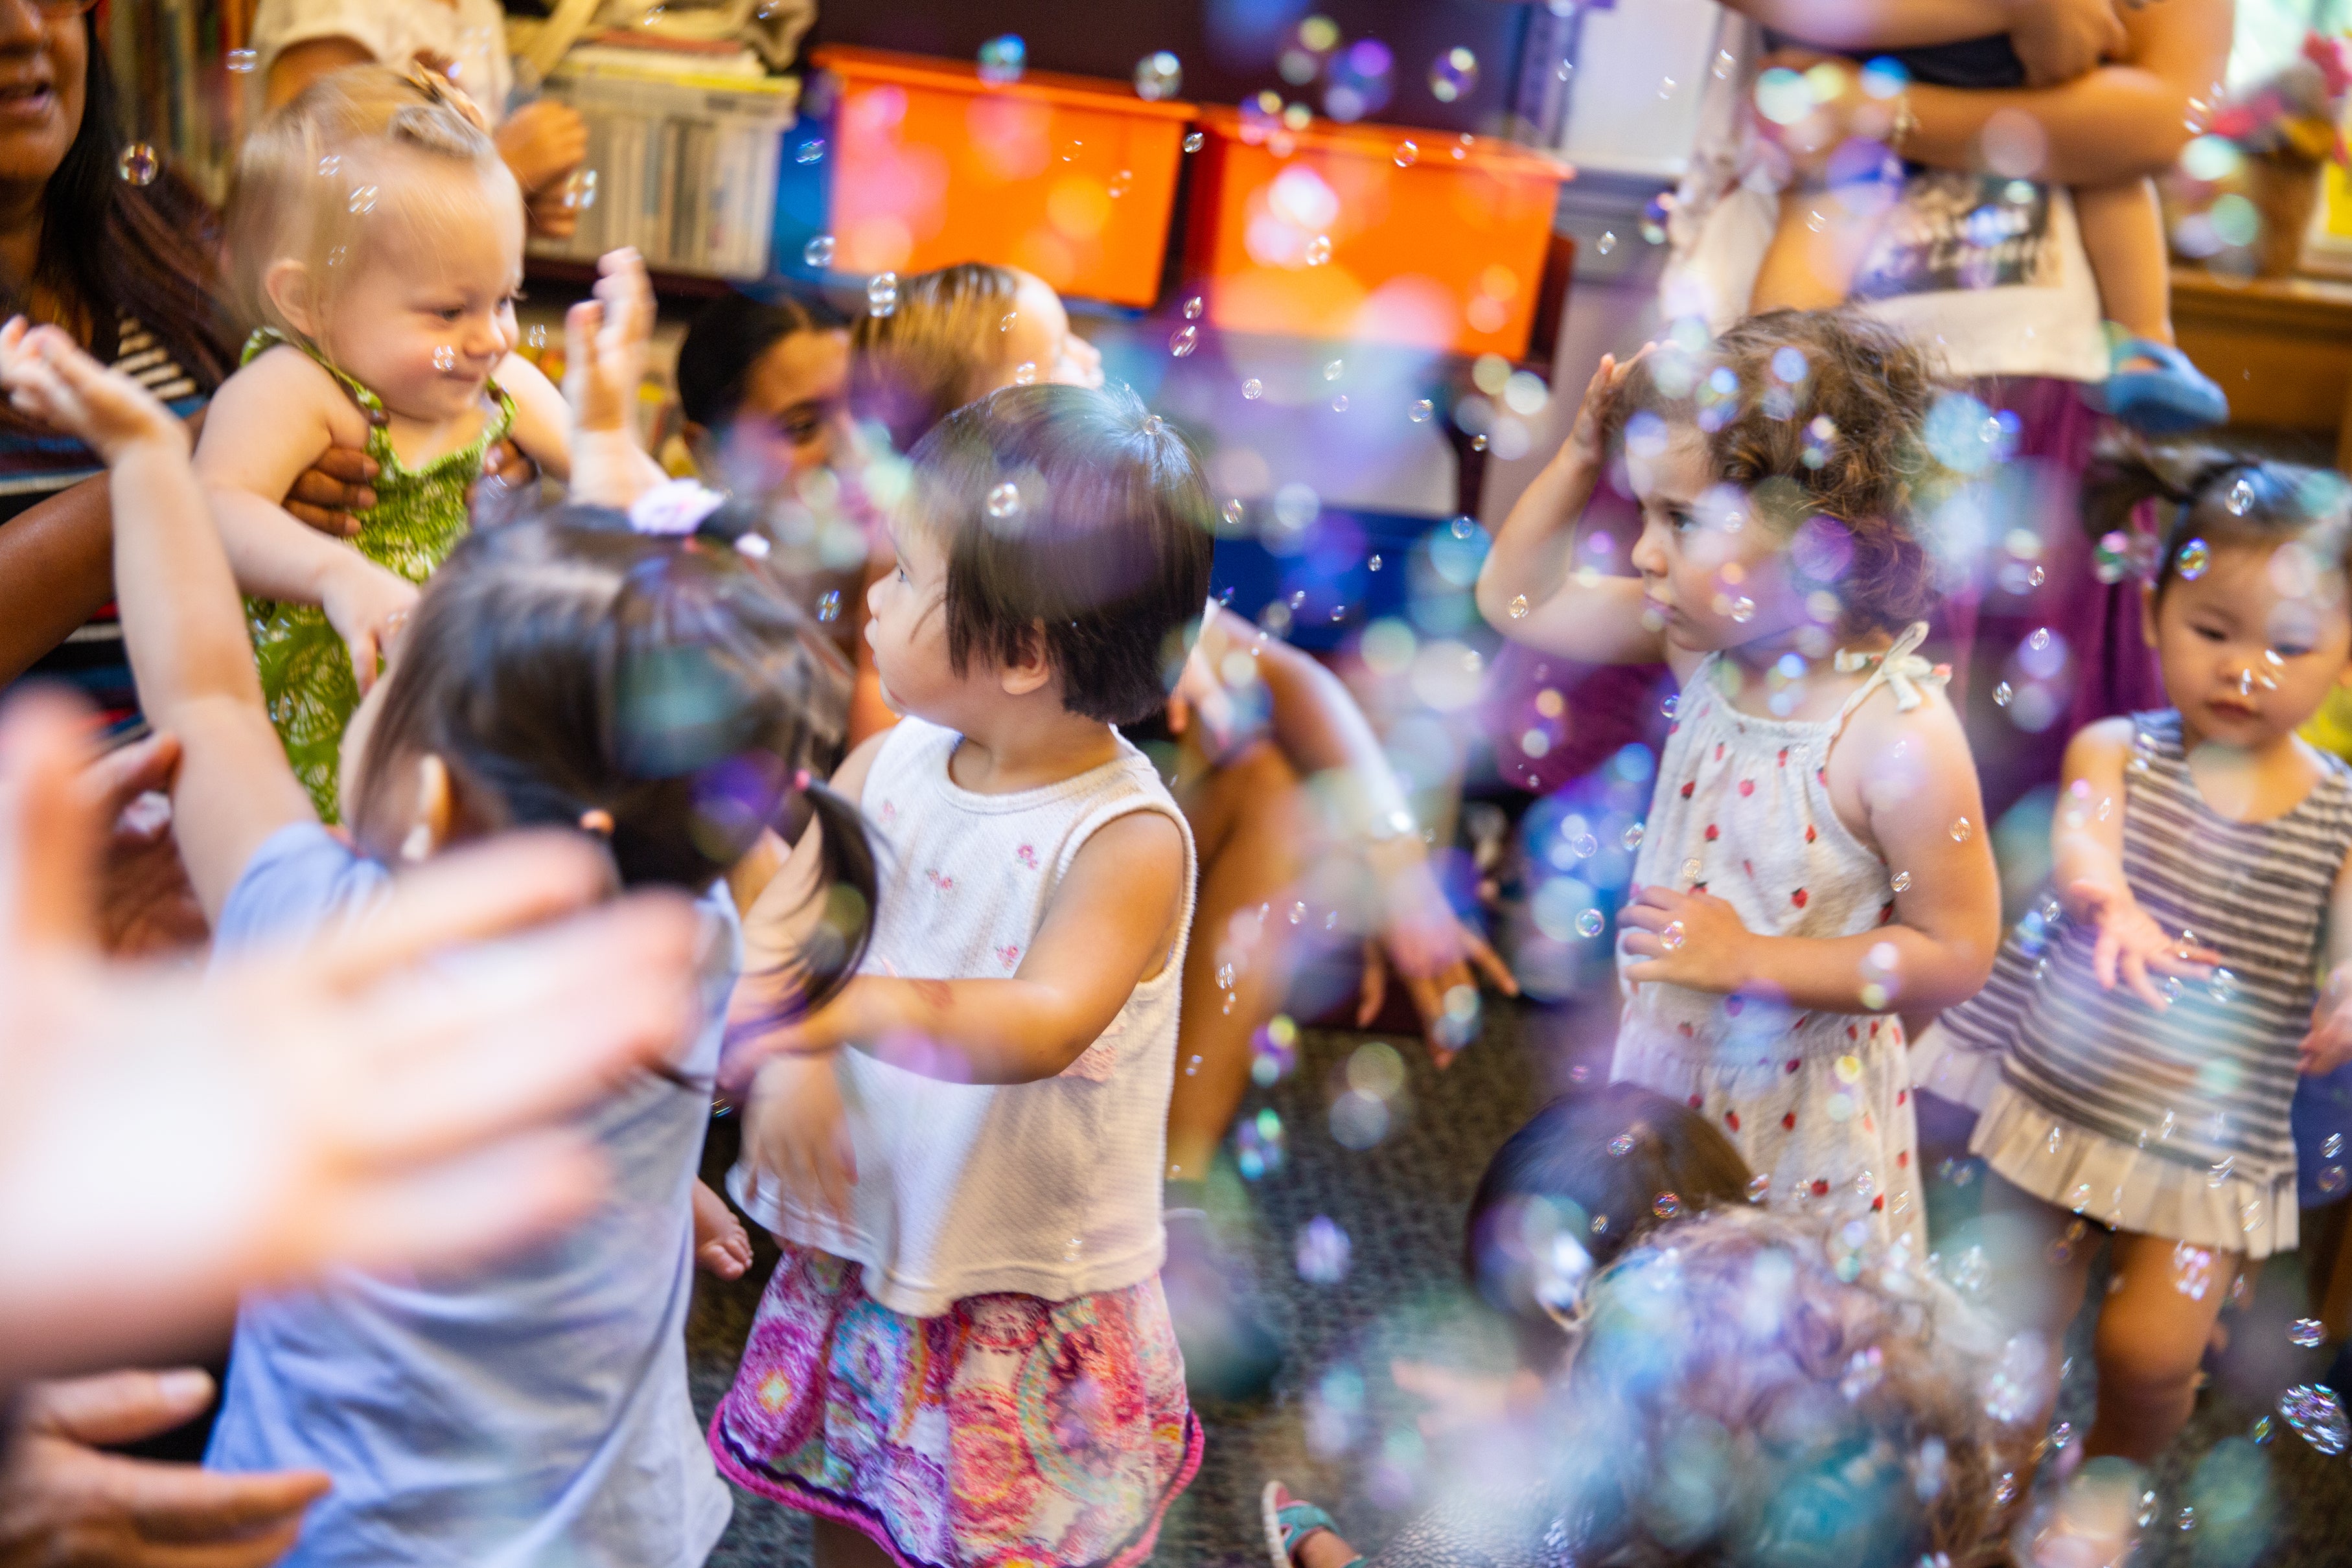 Children play amid bubbles.